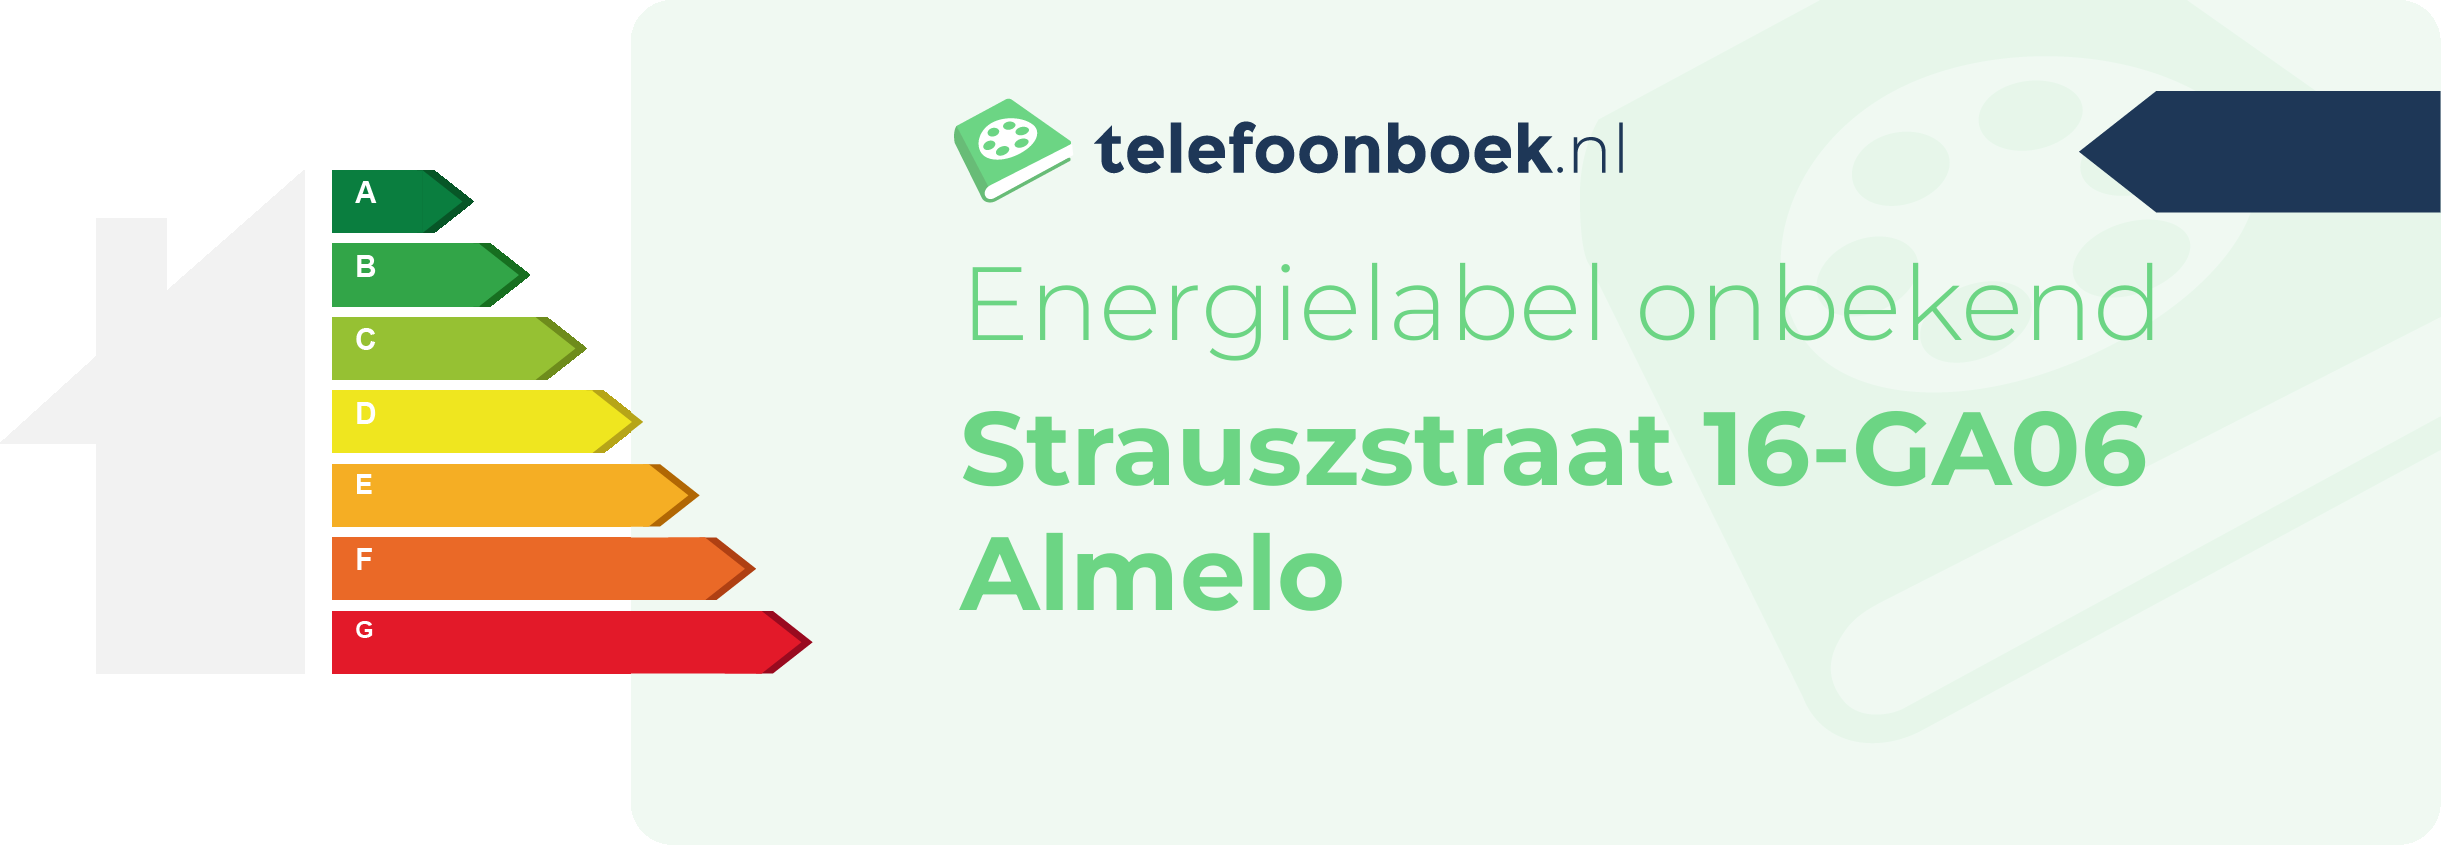 Energielabel Strauszstraat 16-GA06 Almelo